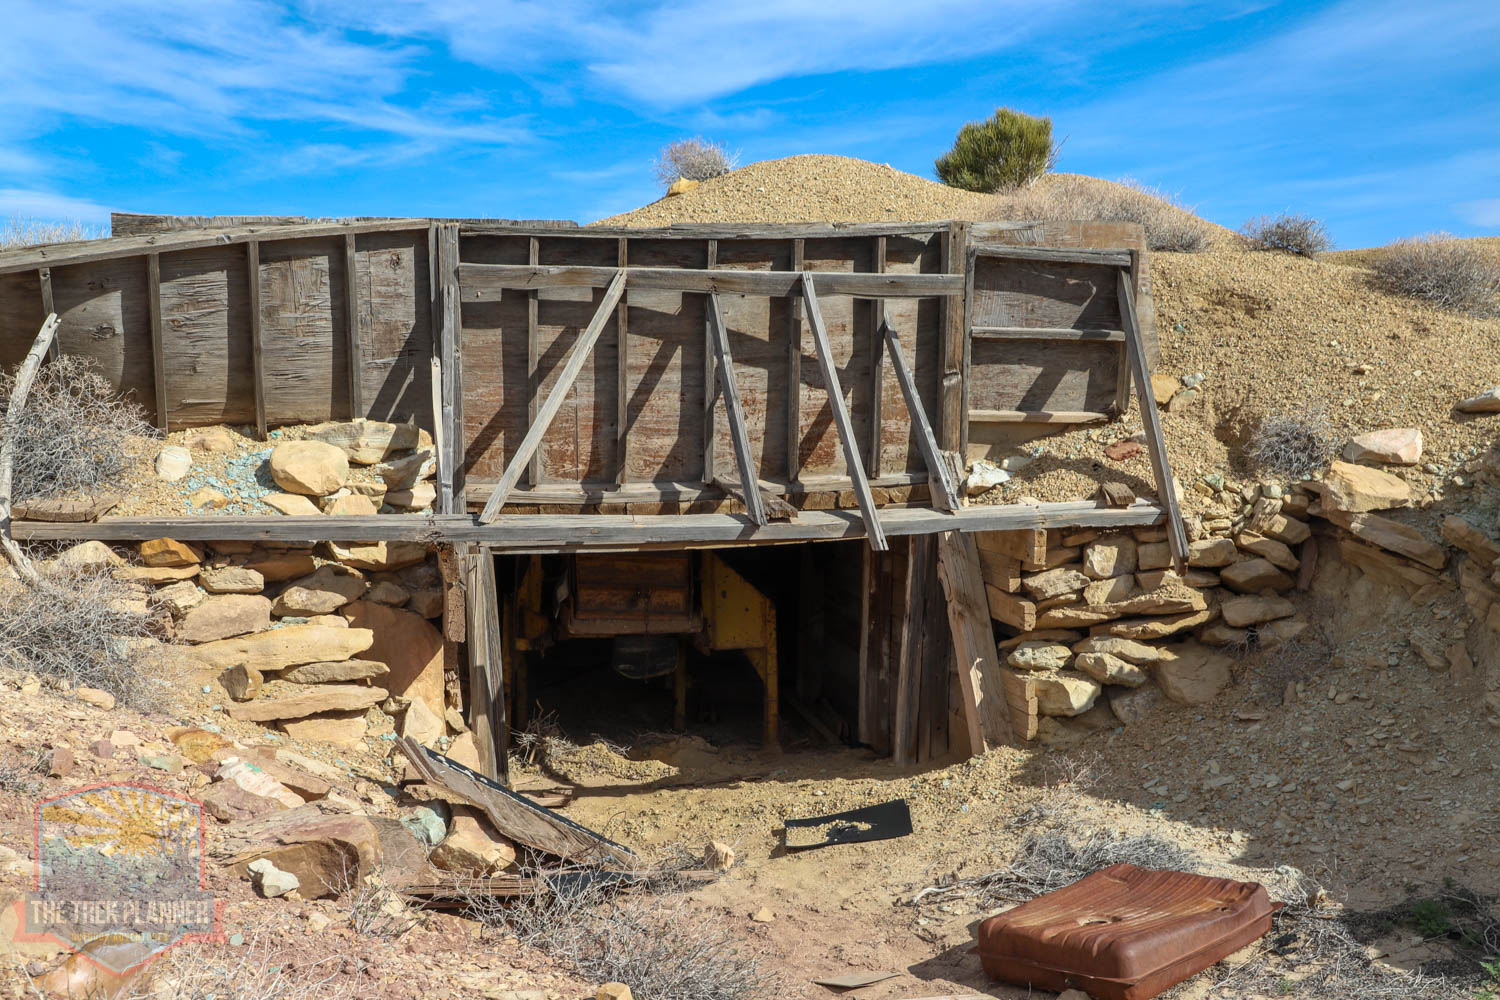 Exploring an old Copper Mine in Central Utah